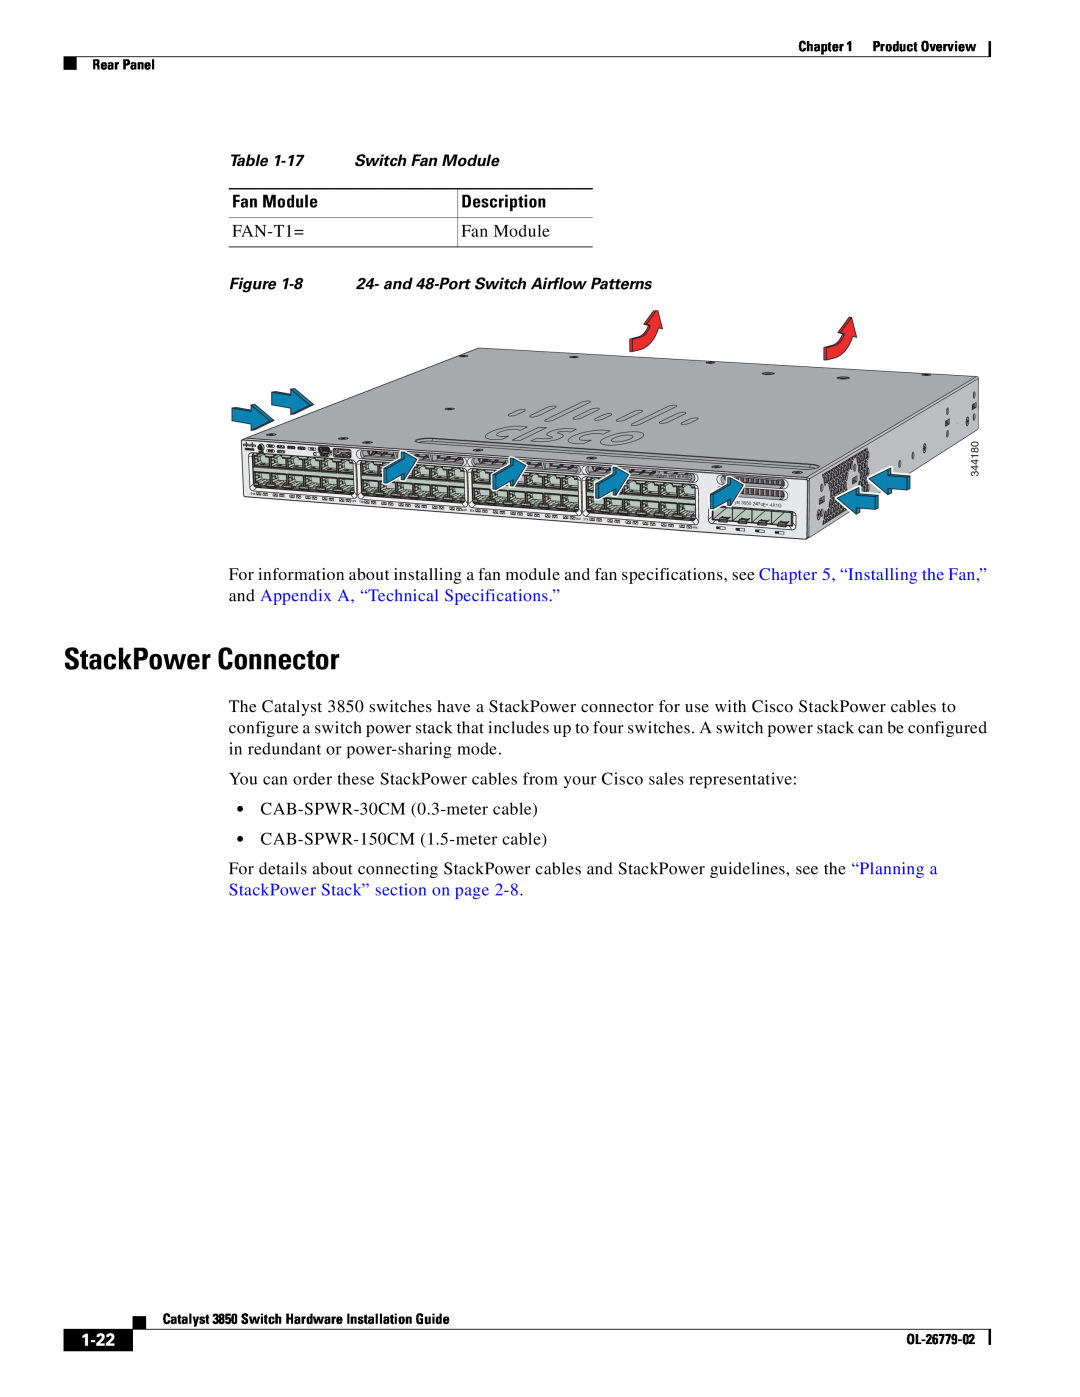 Cisco Systems C3850NM41G, WSC385024TS, C3850NM210G manual StackPower Connector, 1-22, Fan Module, Description, FAN-T1= 